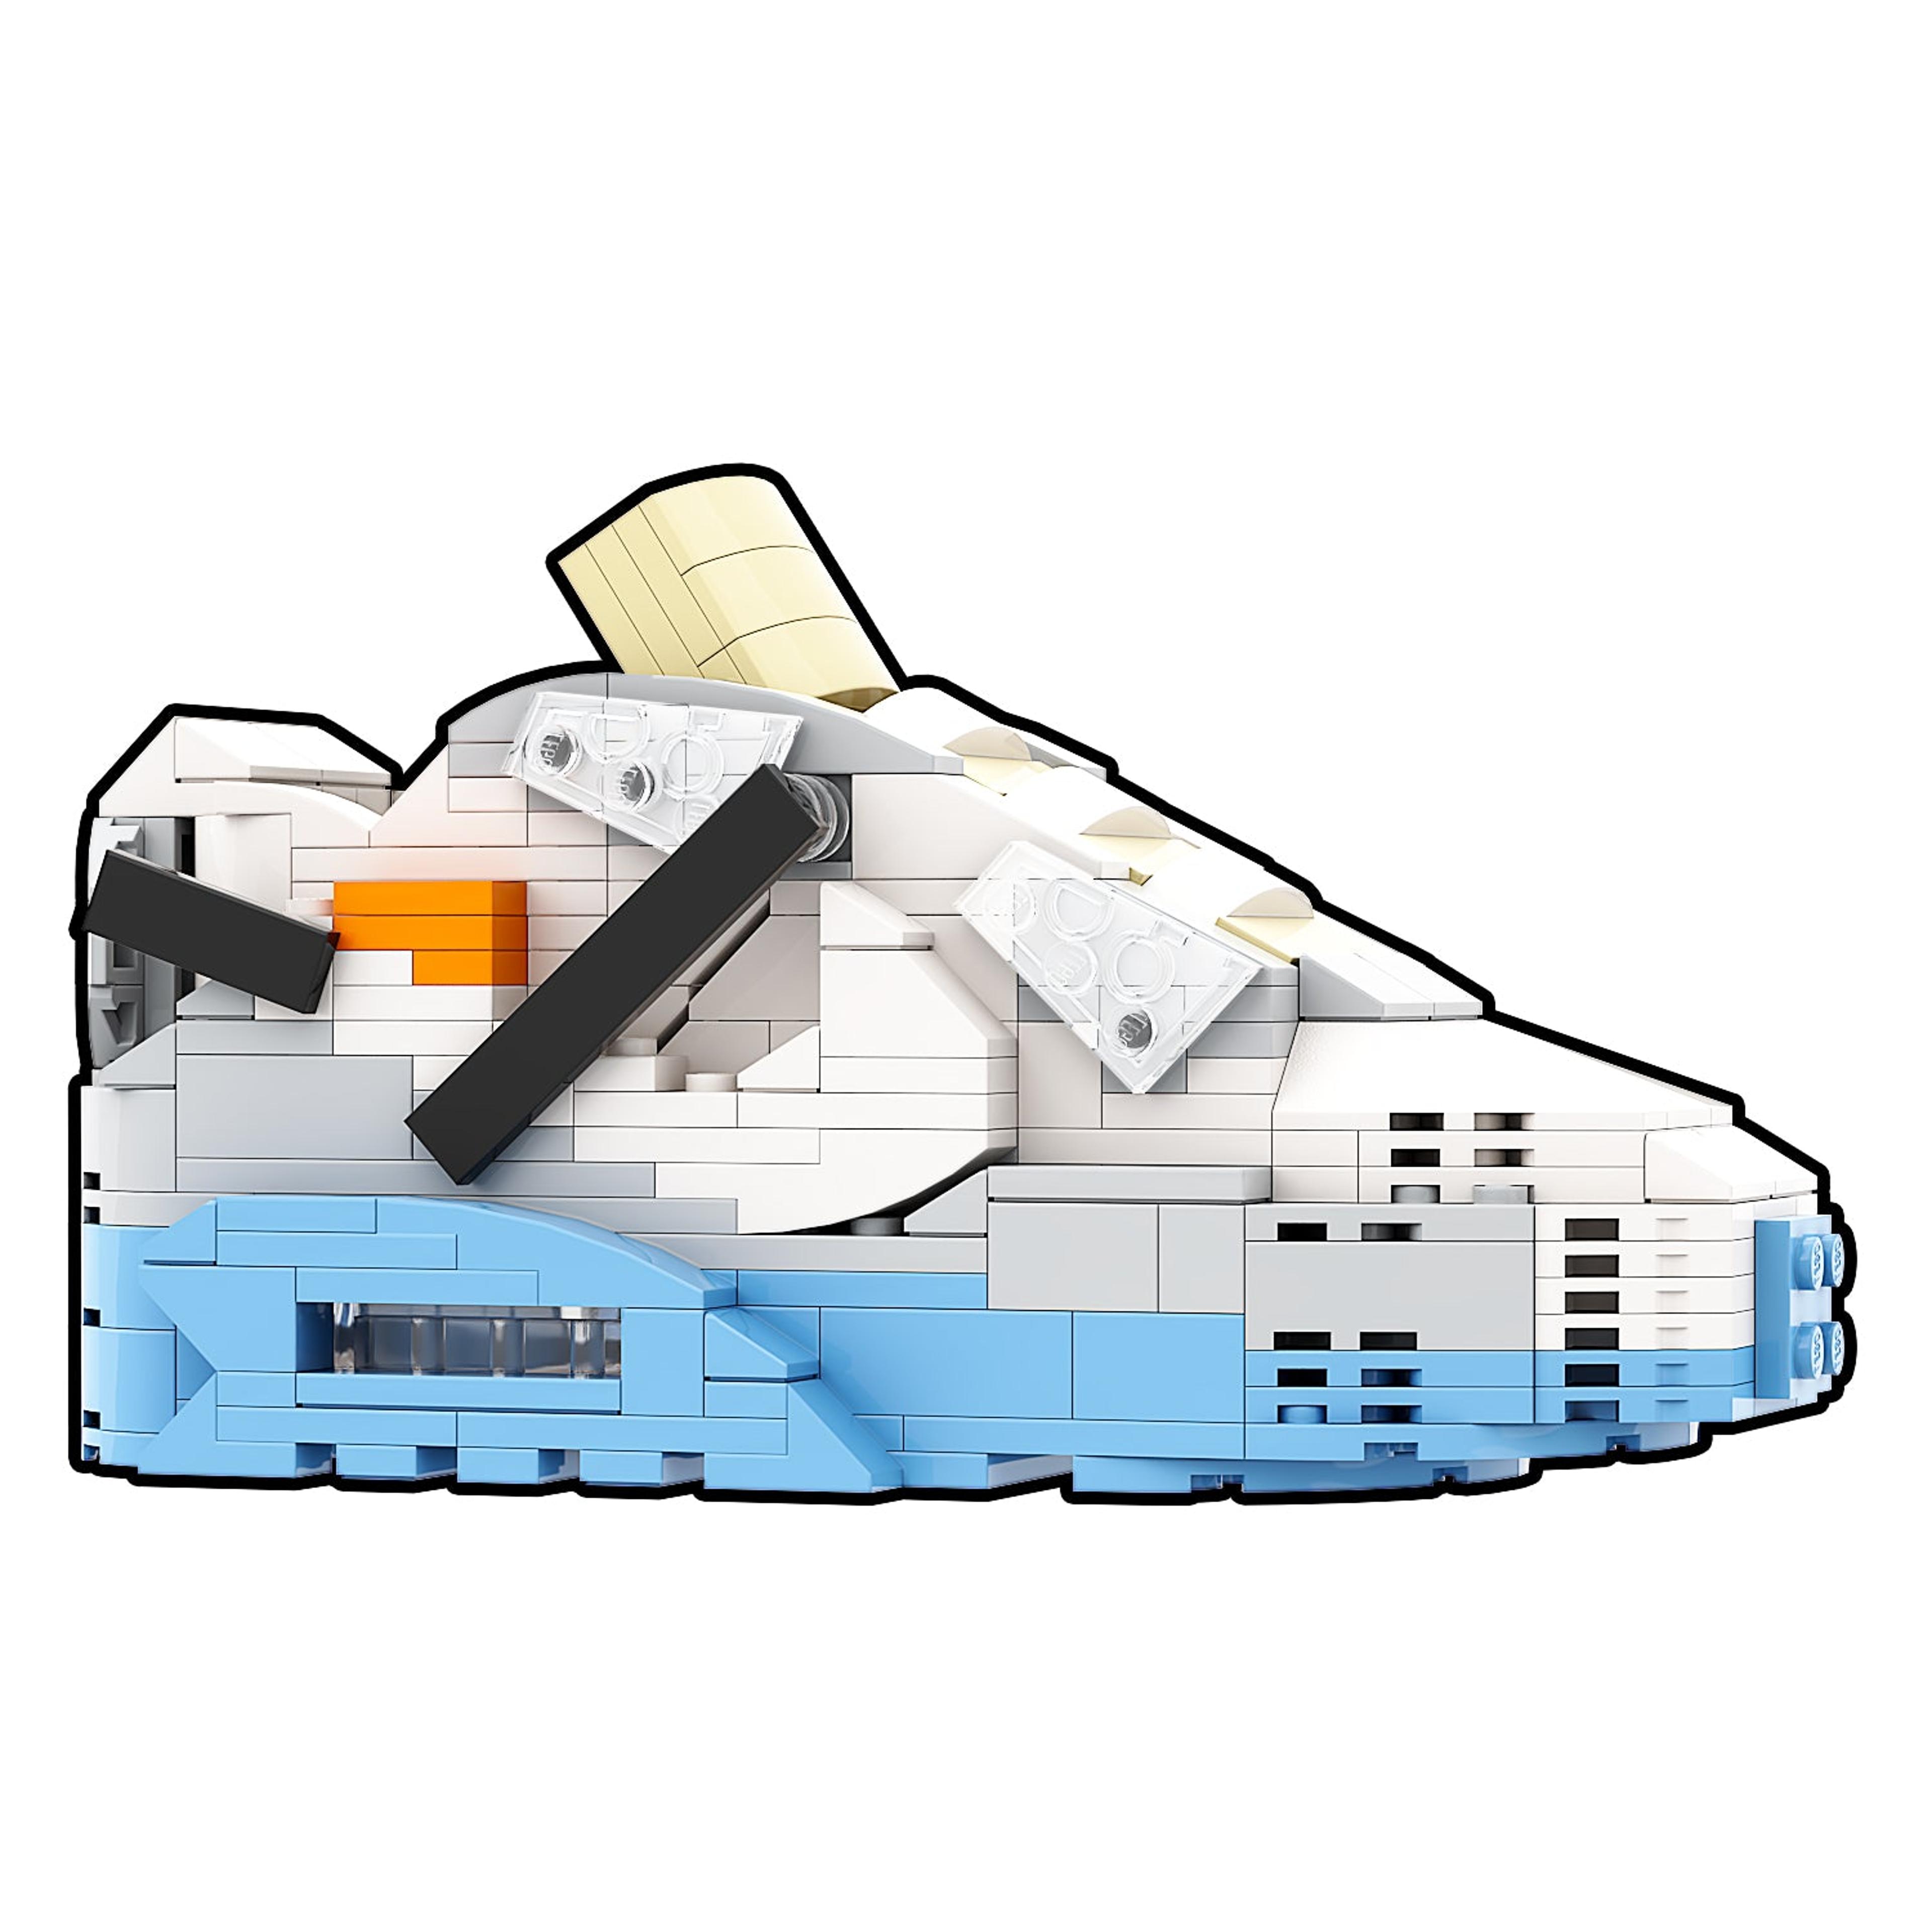 Alternate View 5 of REGULAR Air Max 90 "Off-White White" Sneaker Bricks with Mini Fi